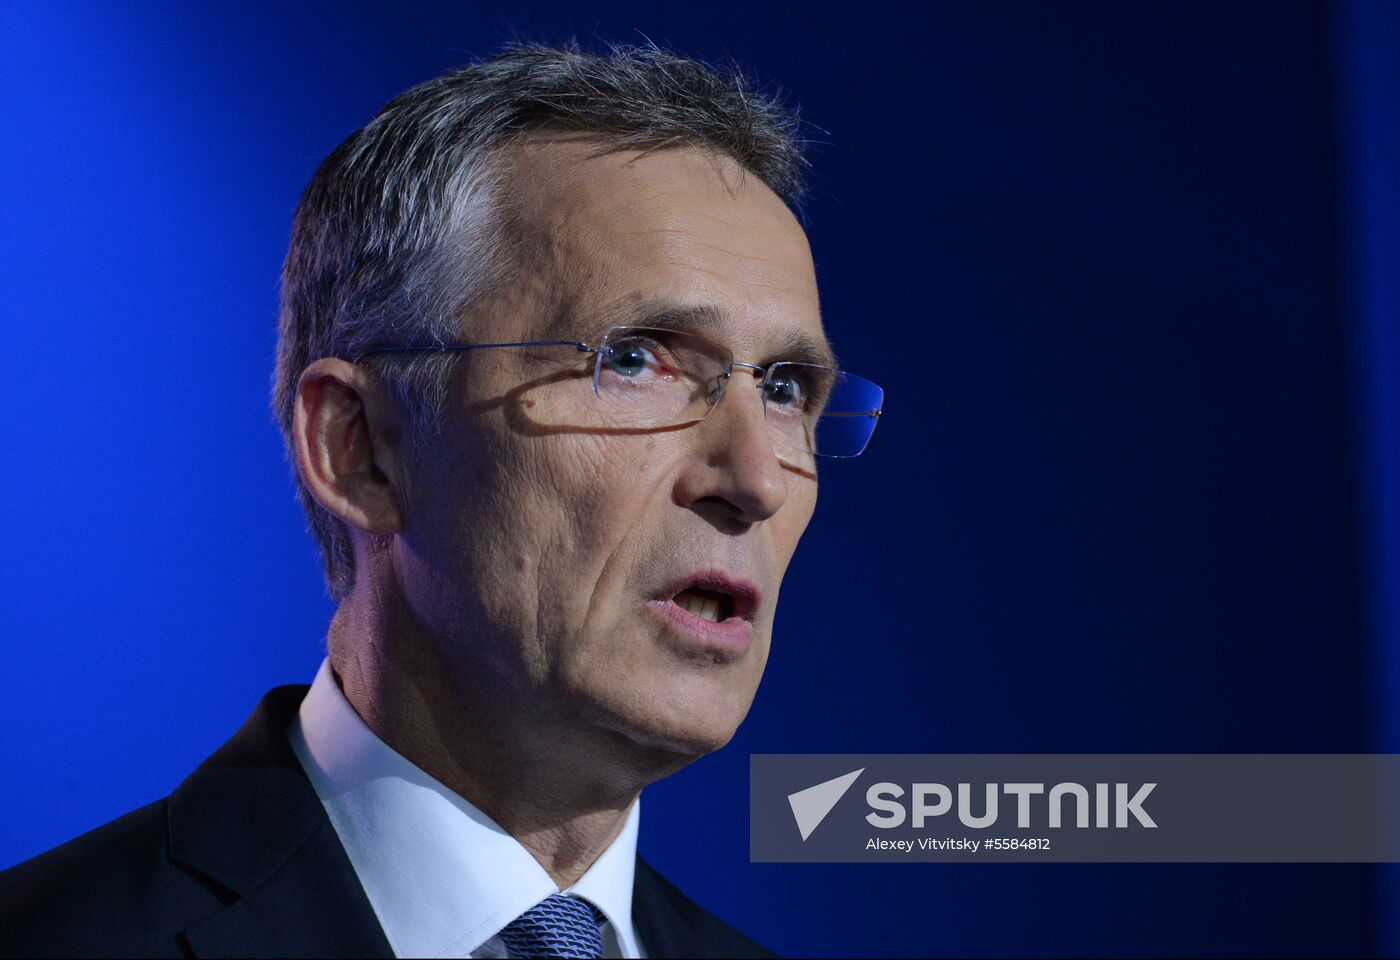 News conference with NATO Secretary General Jens Stoltenberg